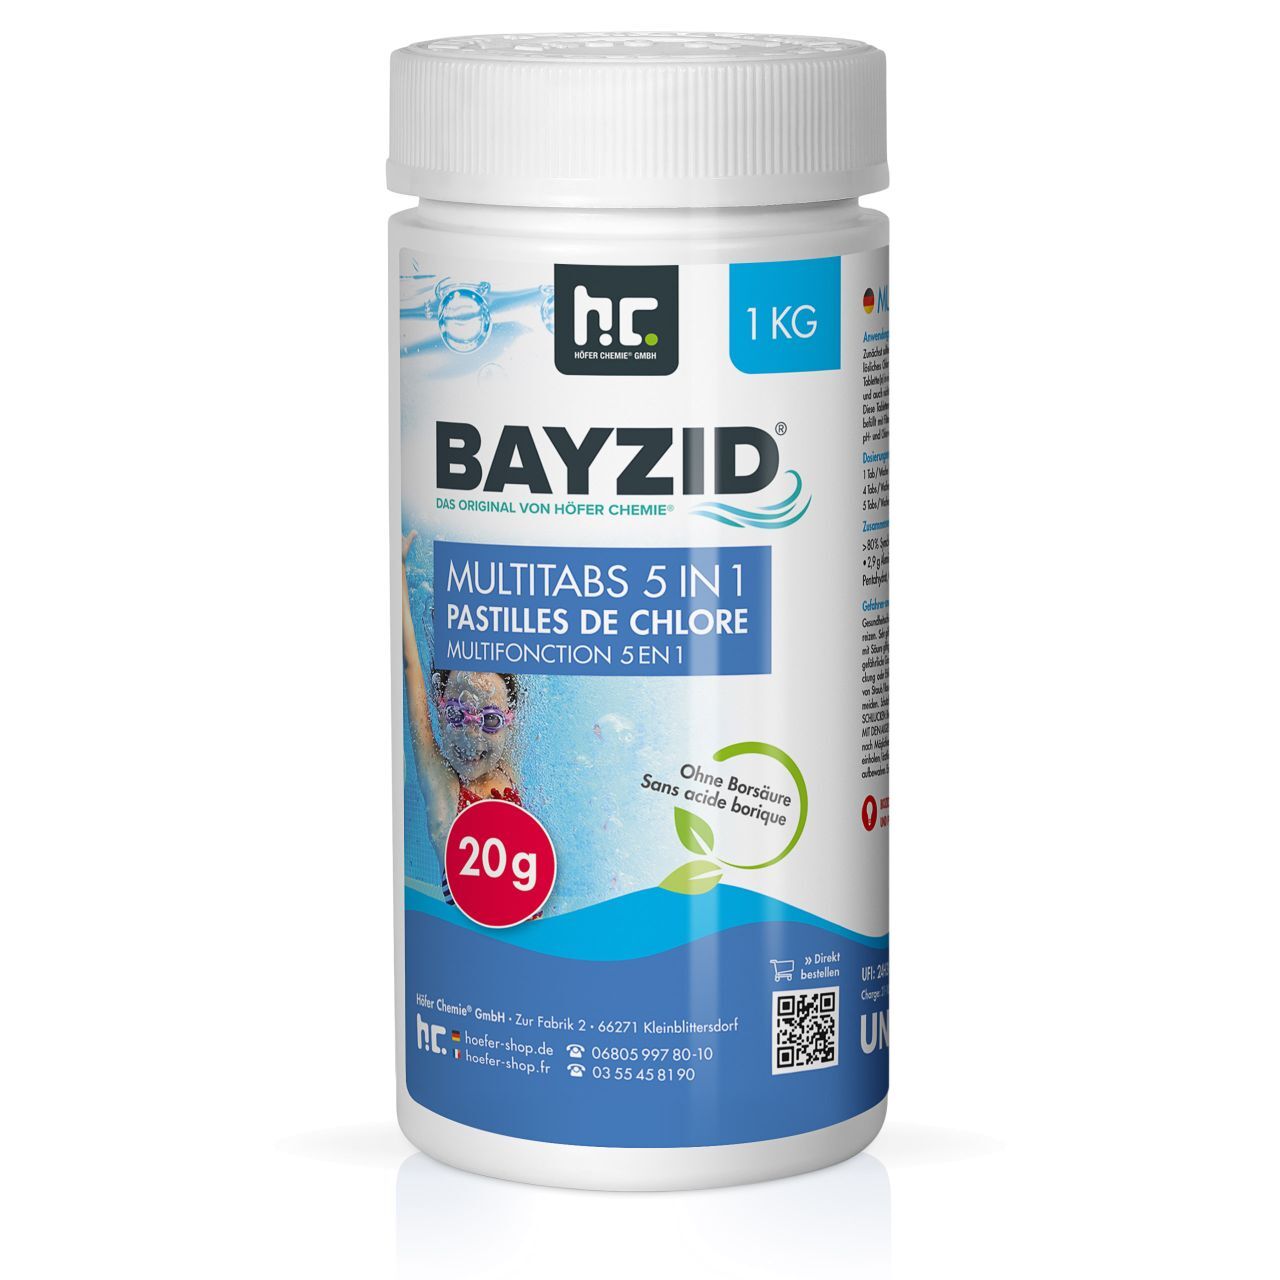 BAYZID 1 kg Bayzid® pastilles de chlore multifonction 20g 5 en 1 (1 x 1 kg)